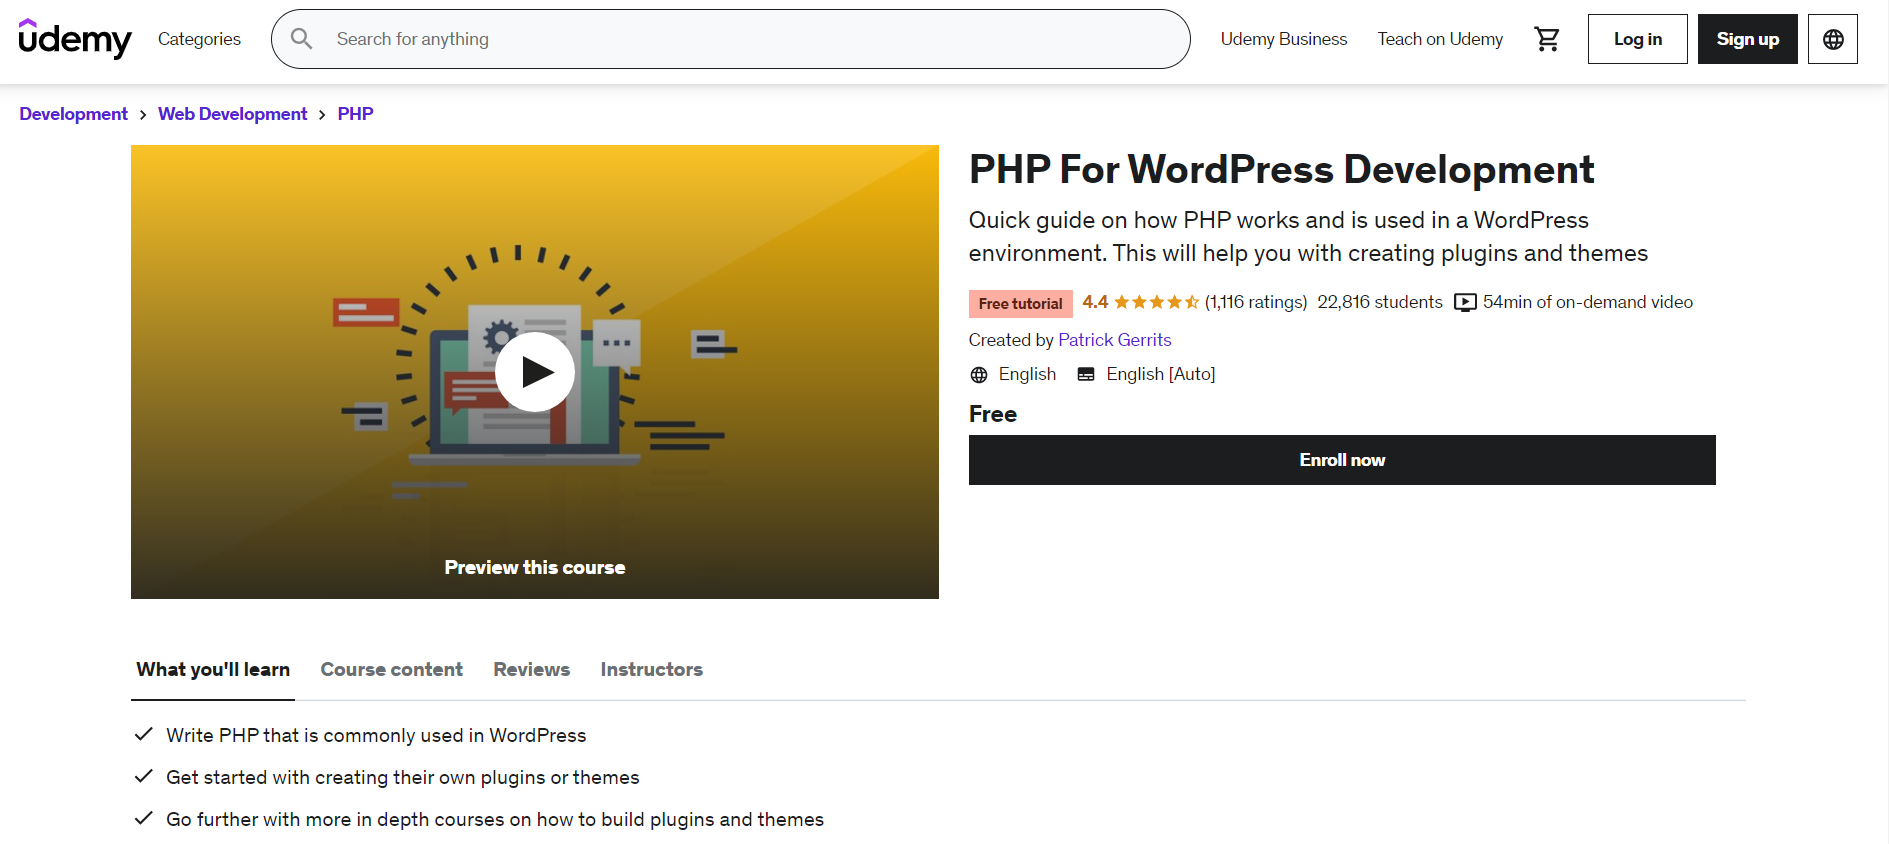 PHP for WordPress Development